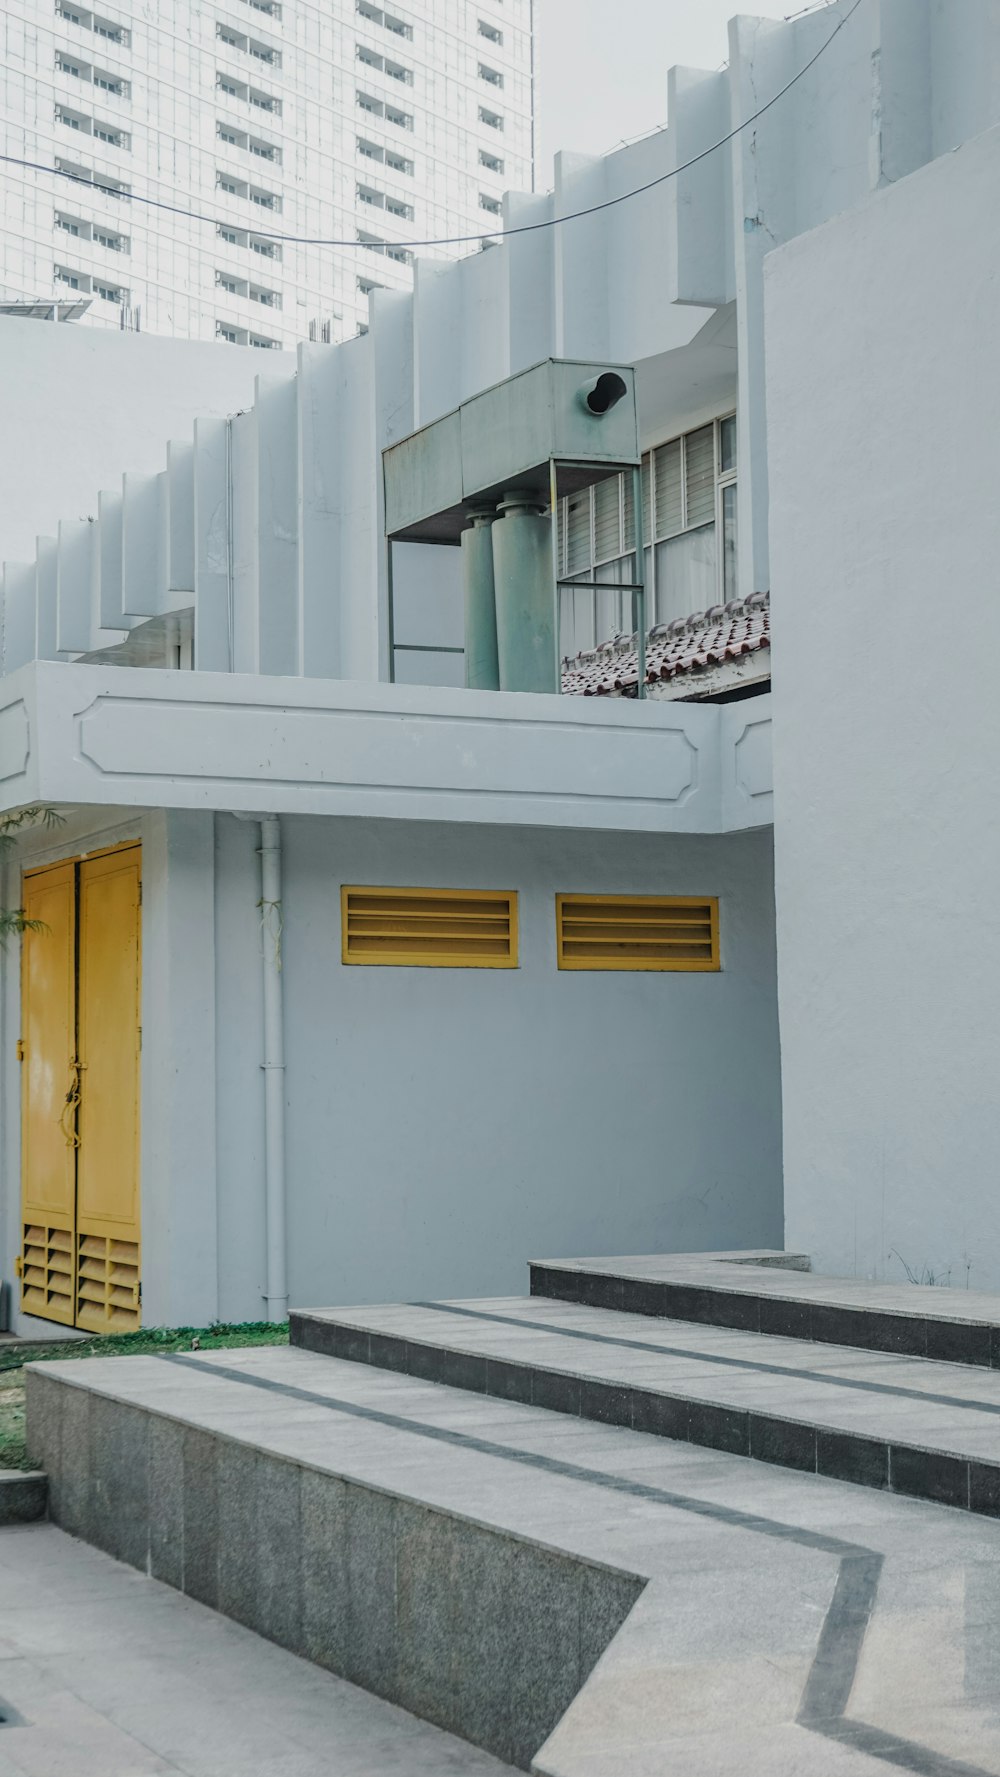 white concrete building with yellow door